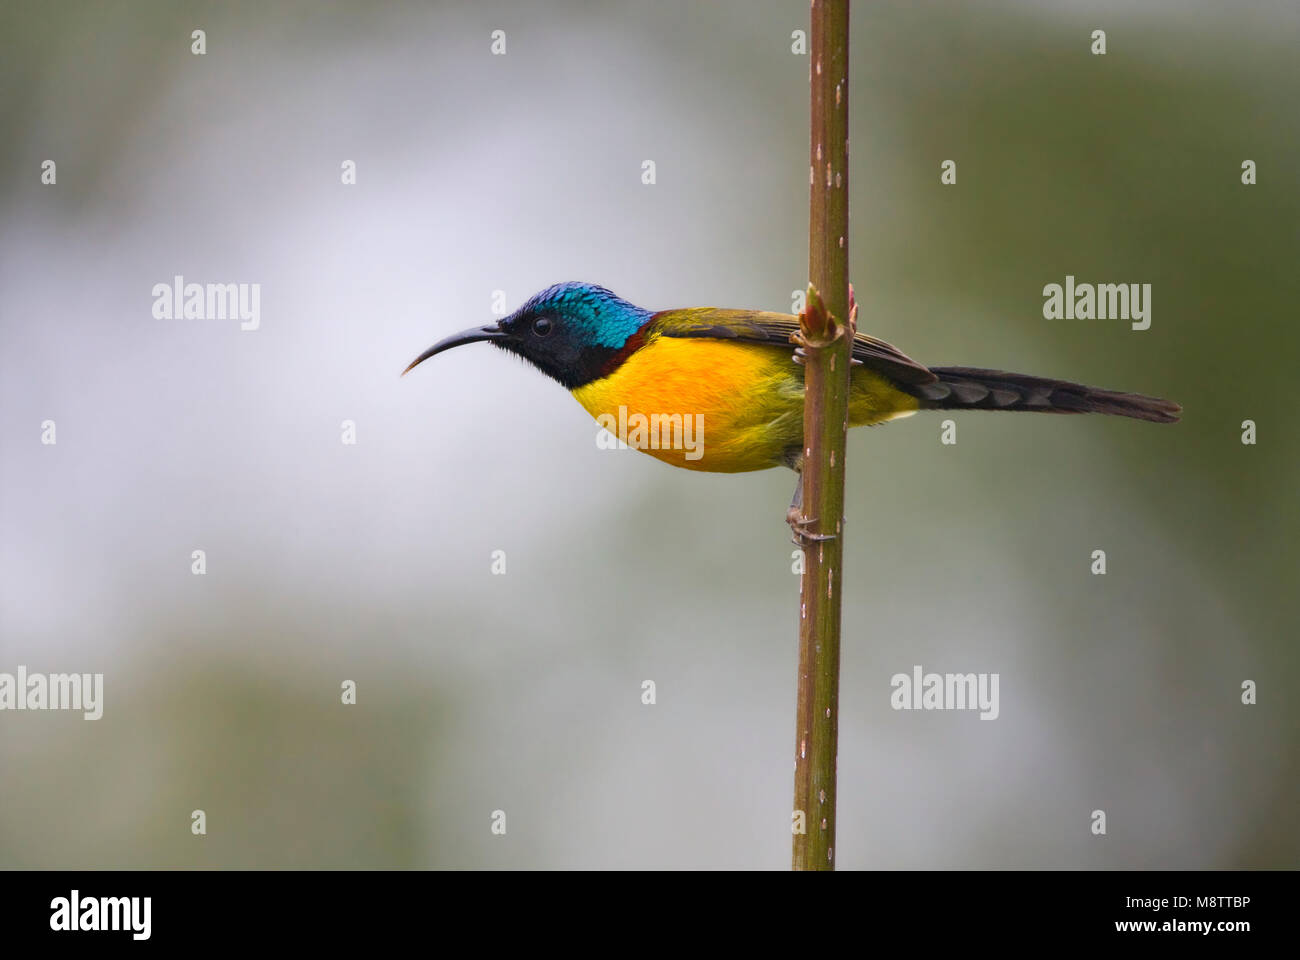 Groenstaarthoningzuiger op een tak; Green-tailed Sunbird on a branch Stock Photo